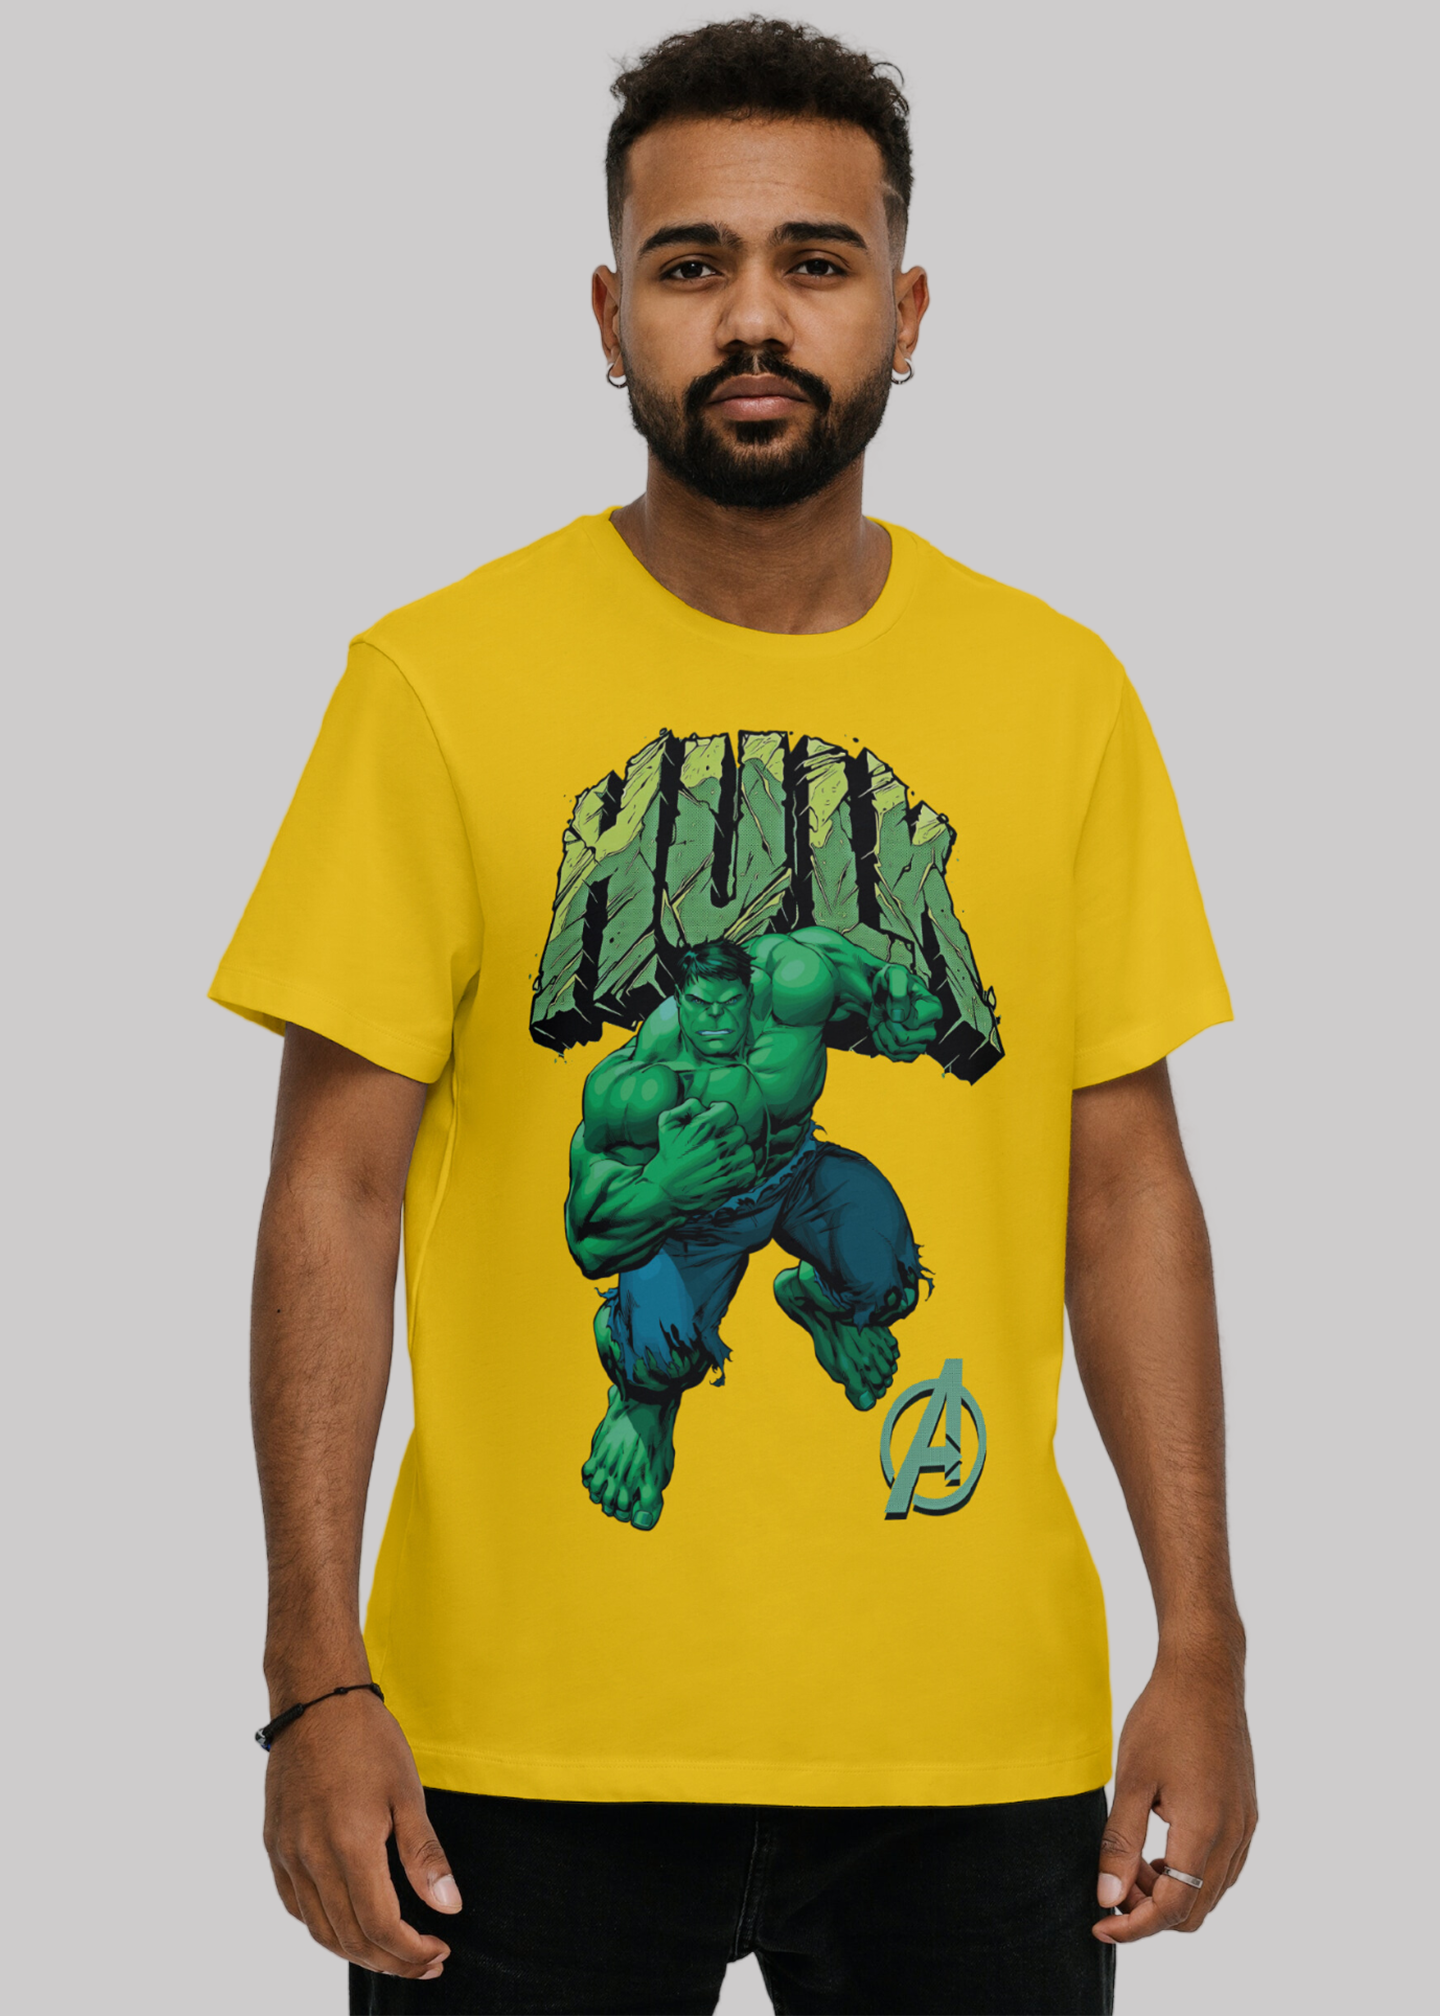 Hulk poster Printed Half Sleeve Premium Cotton T-shirt For Men